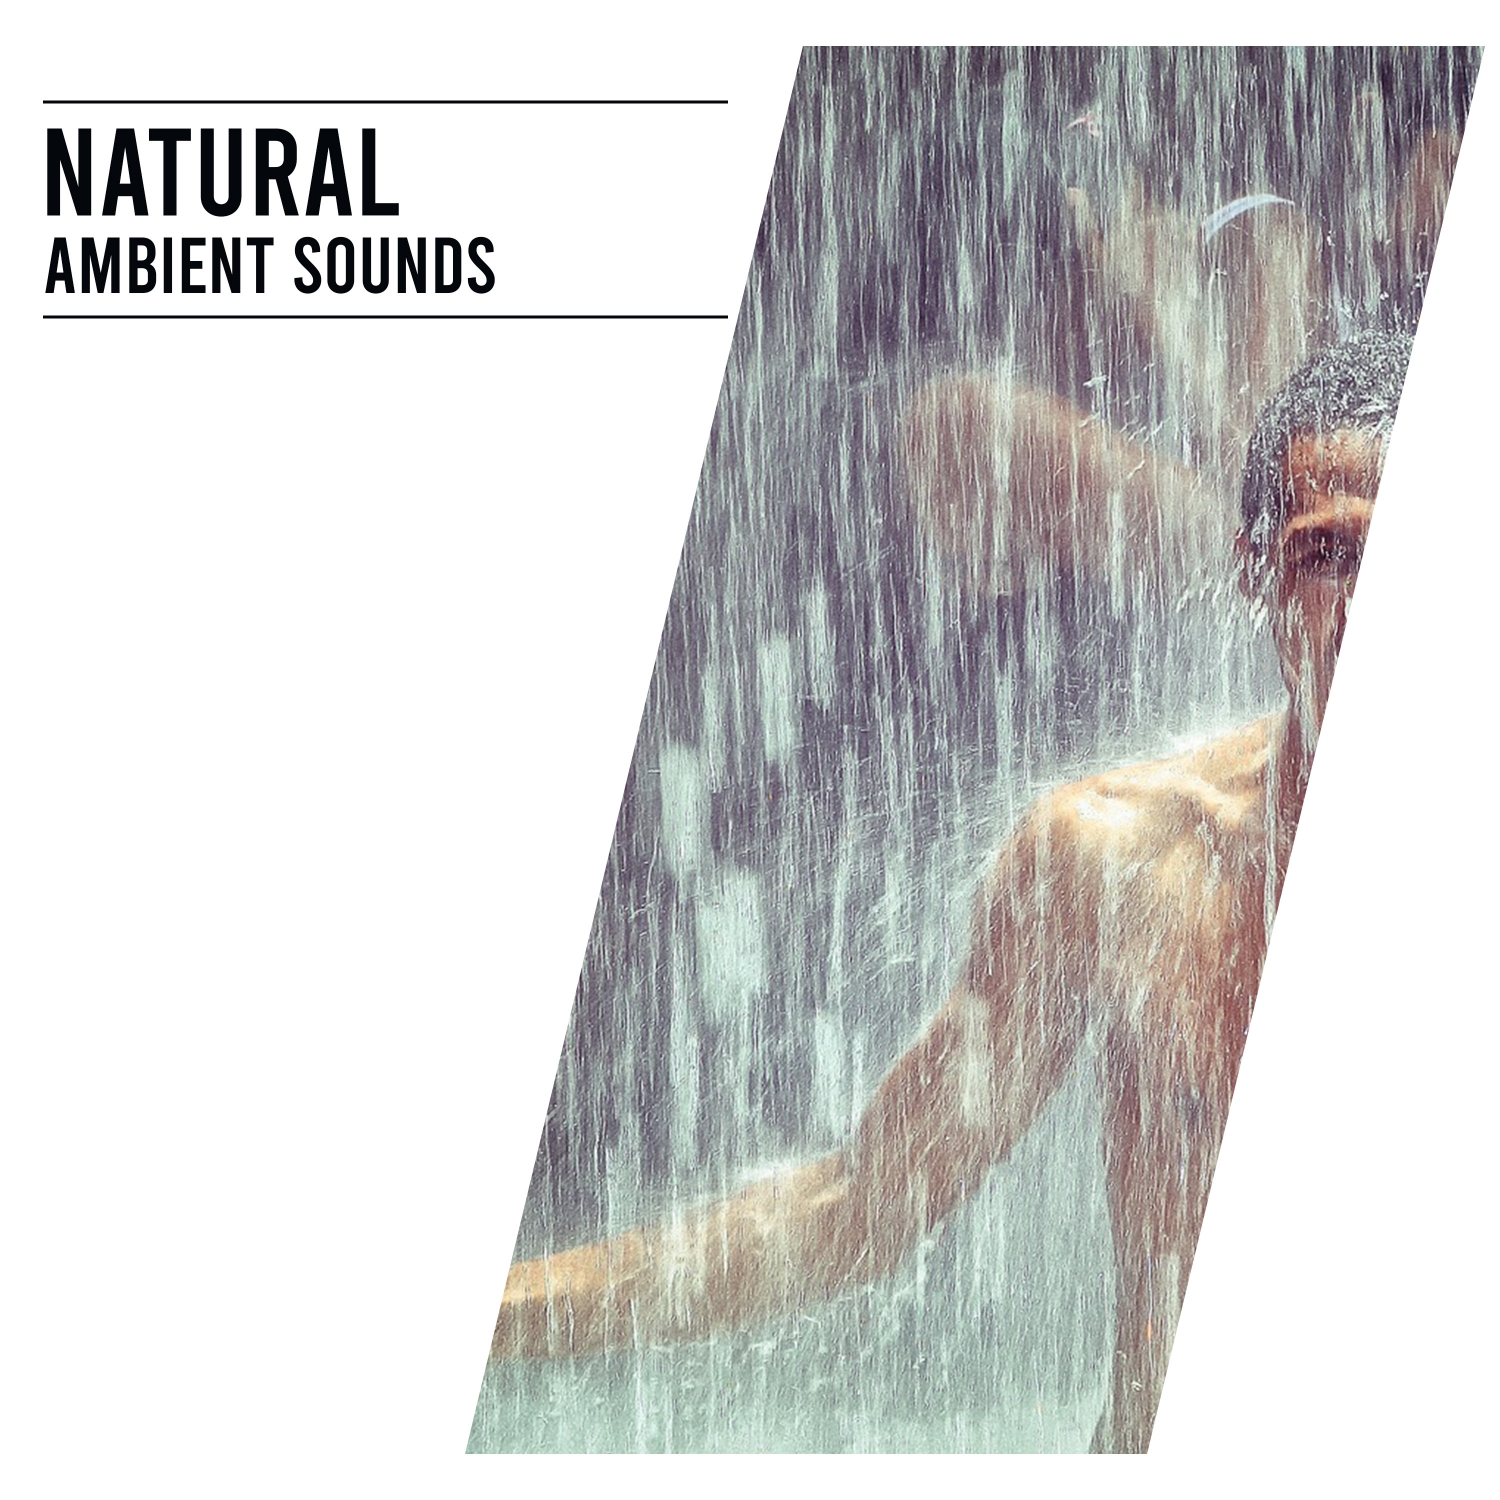 #15 Rain Sounds of Nature - Calming, Natural Ambient Sounds